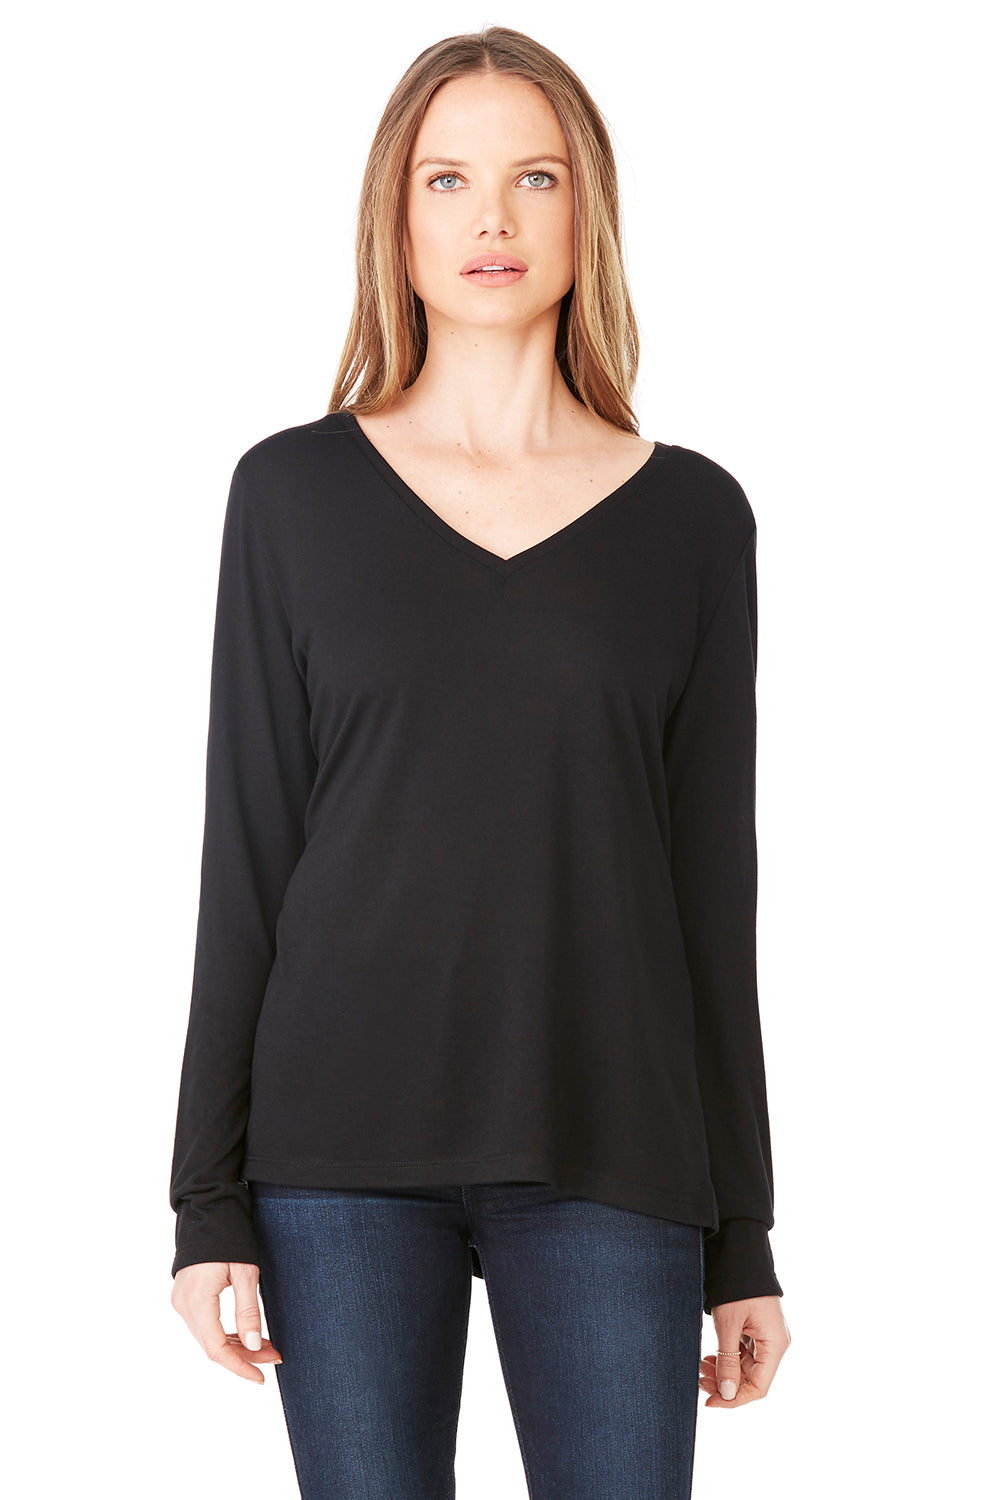 Bella + Canvas 8855 Womens Flowy Long Sleeve V-Neck T-Shirt Black Front